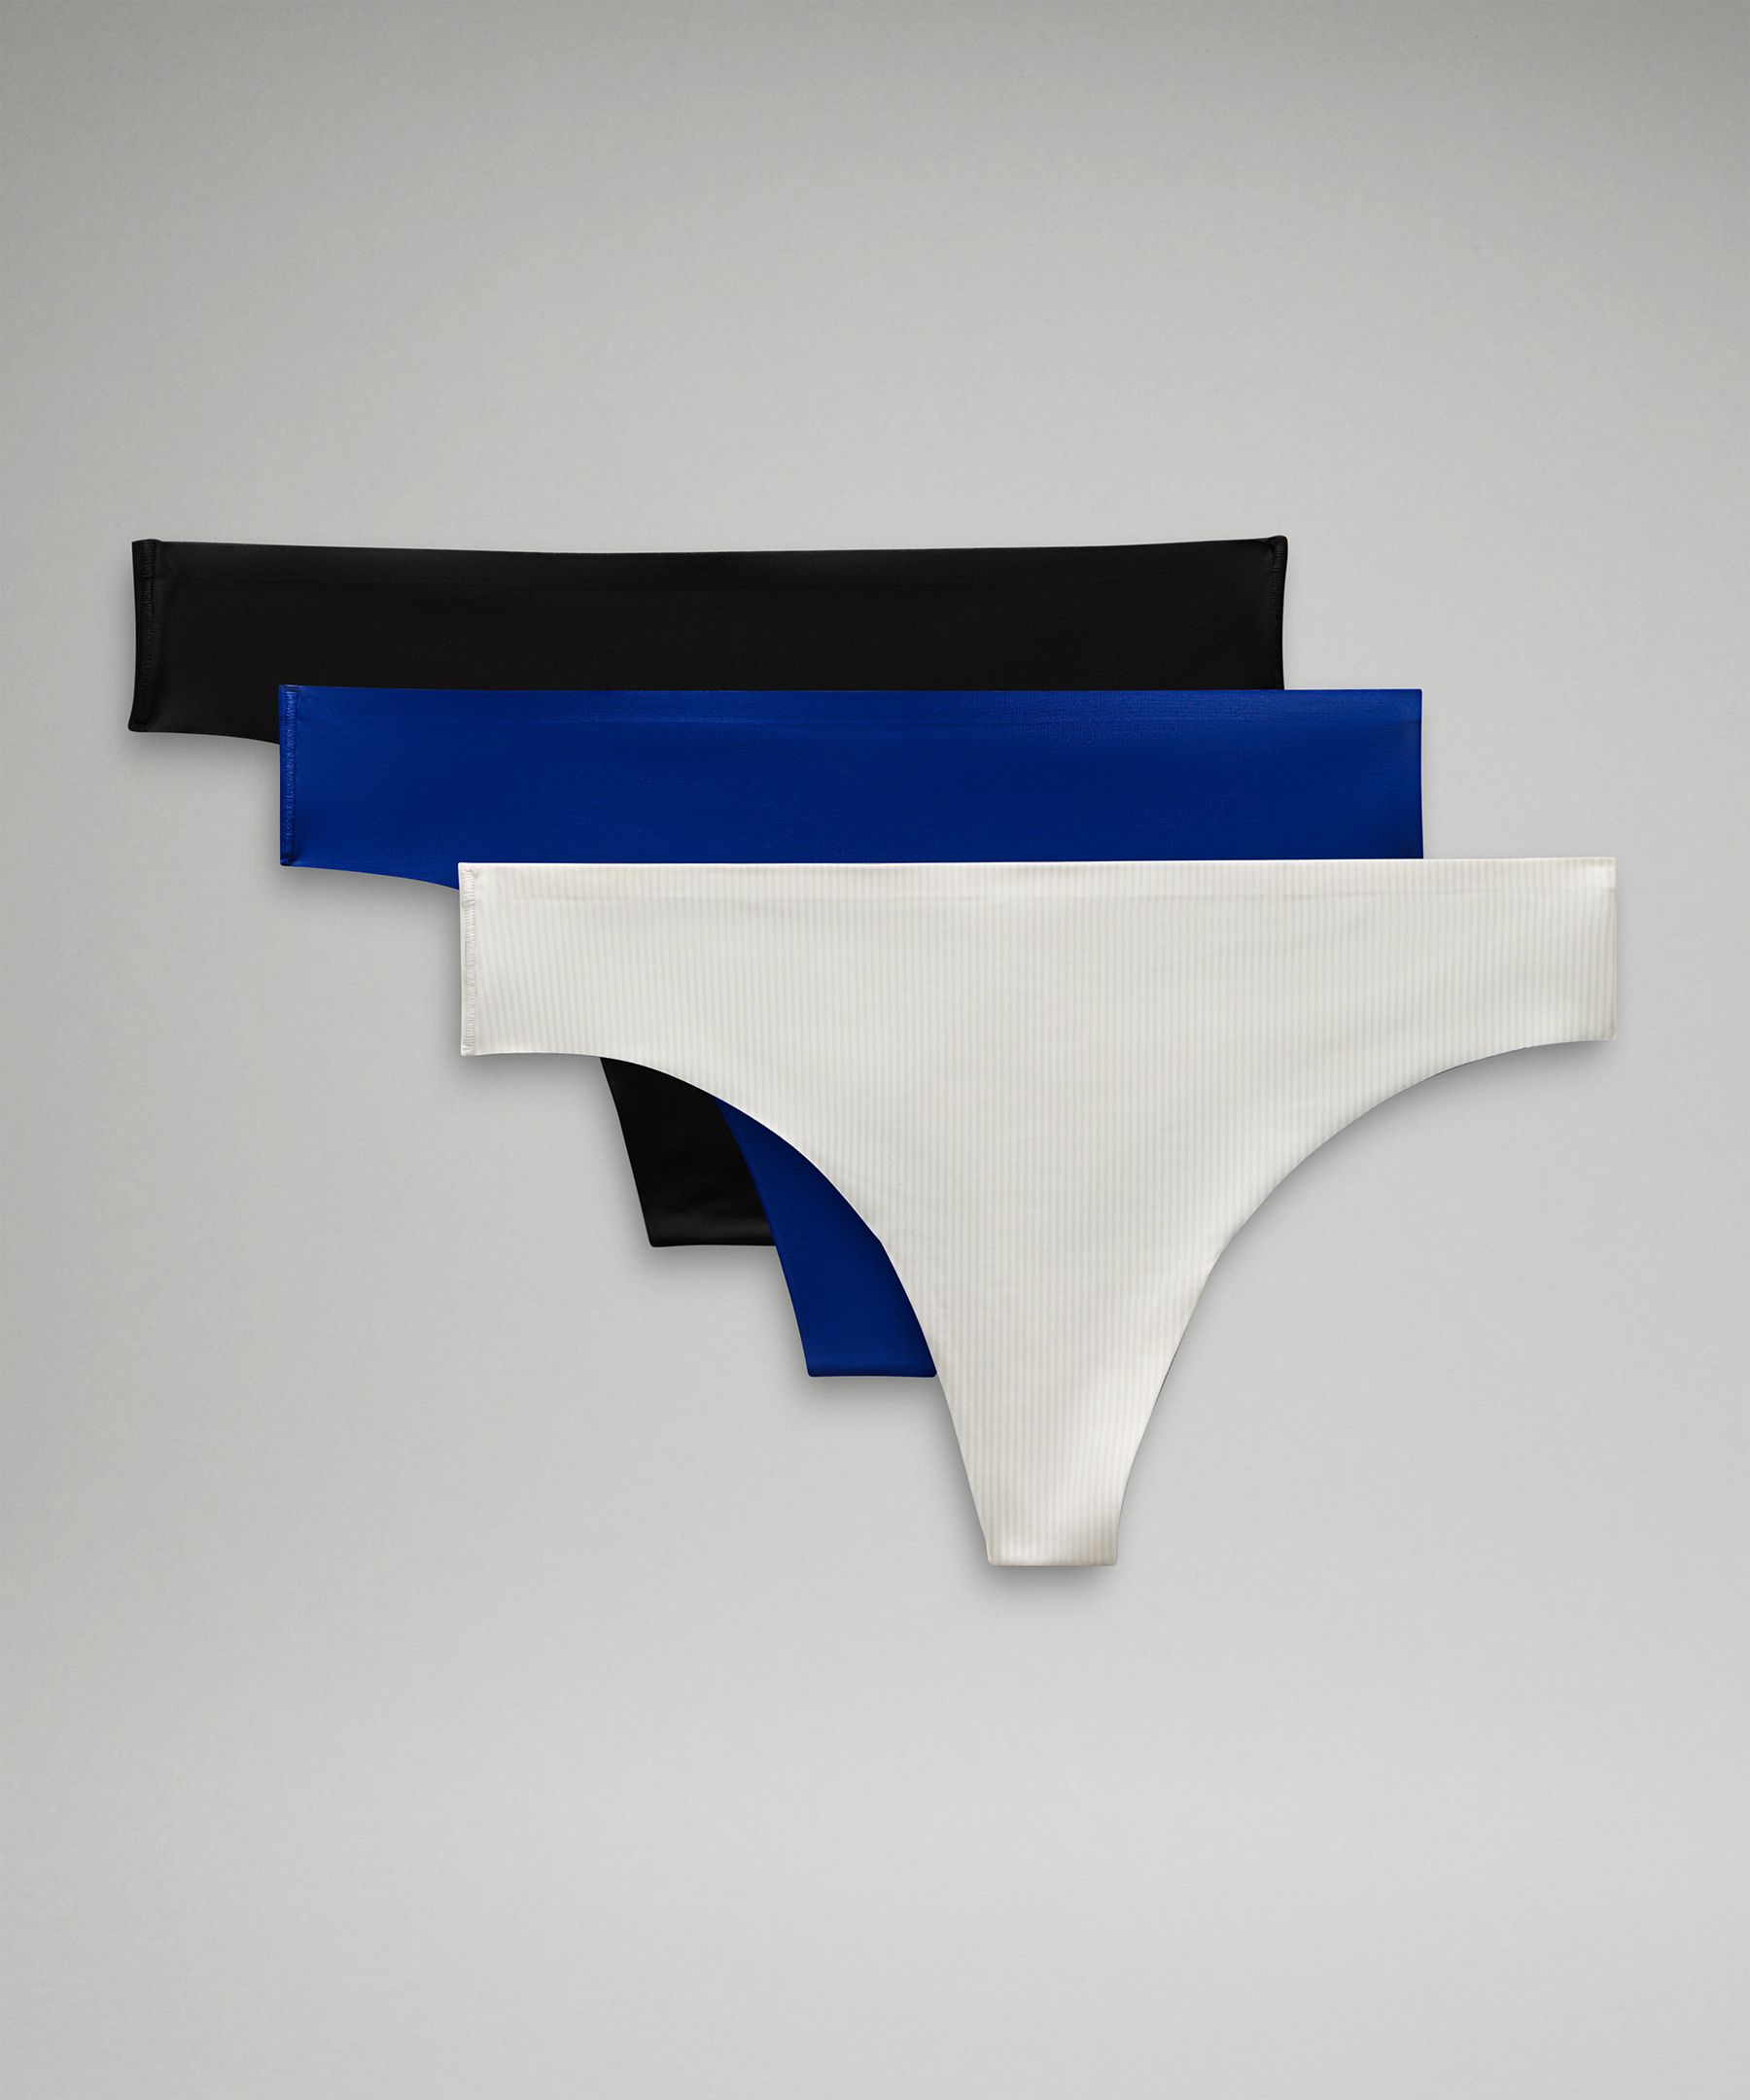 Lululemon InvisiWear Mid-Rise Thong Underwear 5 Pack - 136251067